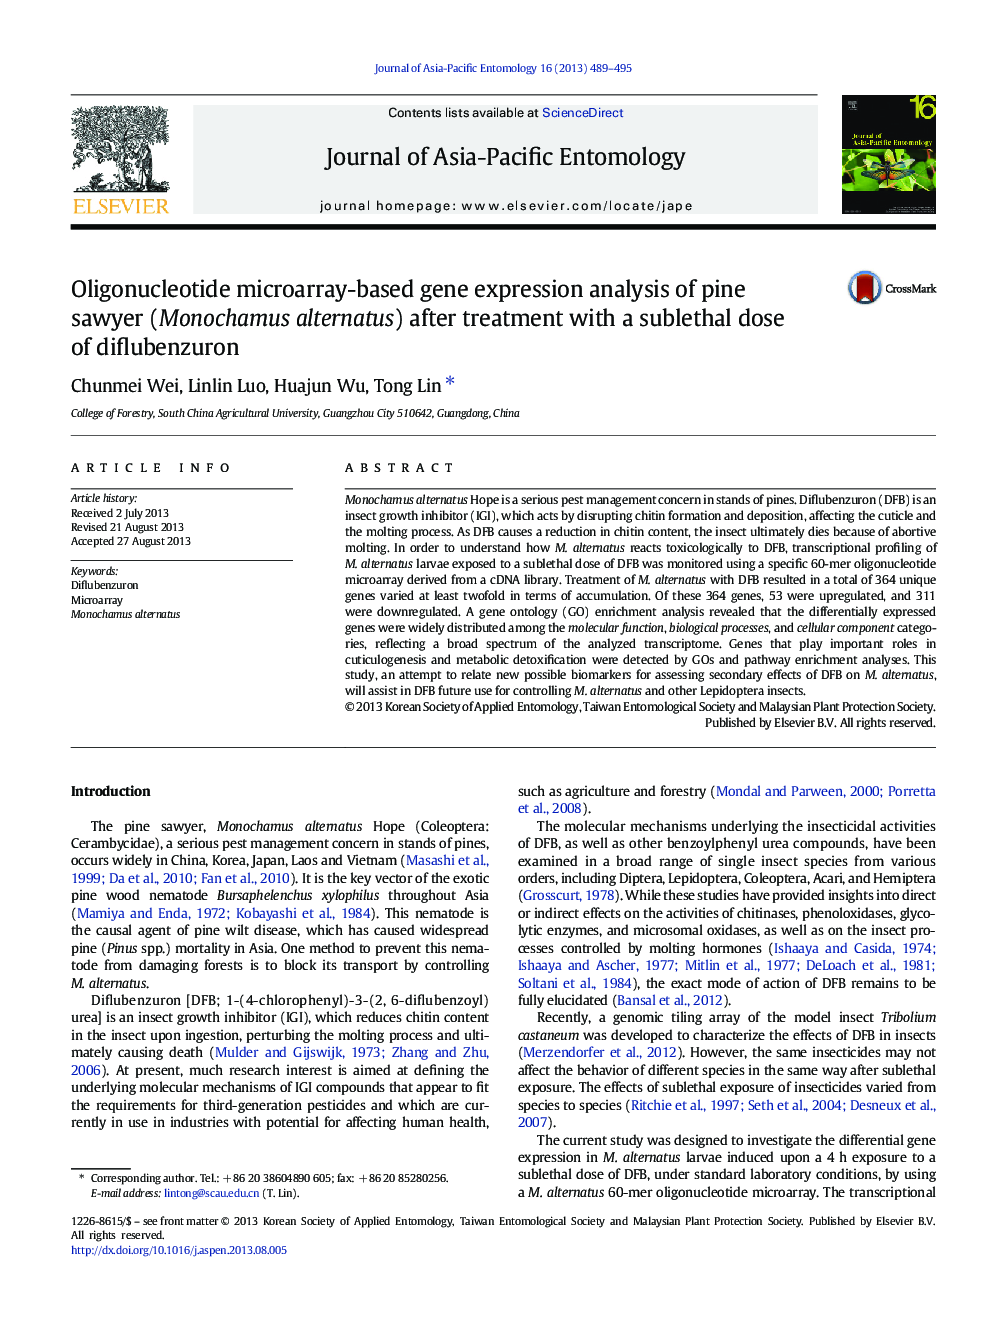 Oligonucleotide microarray-based gene expression analysis of pine sawyer (Monochamus alternatus) after treatment with a sublethal dose of diflubenzuron